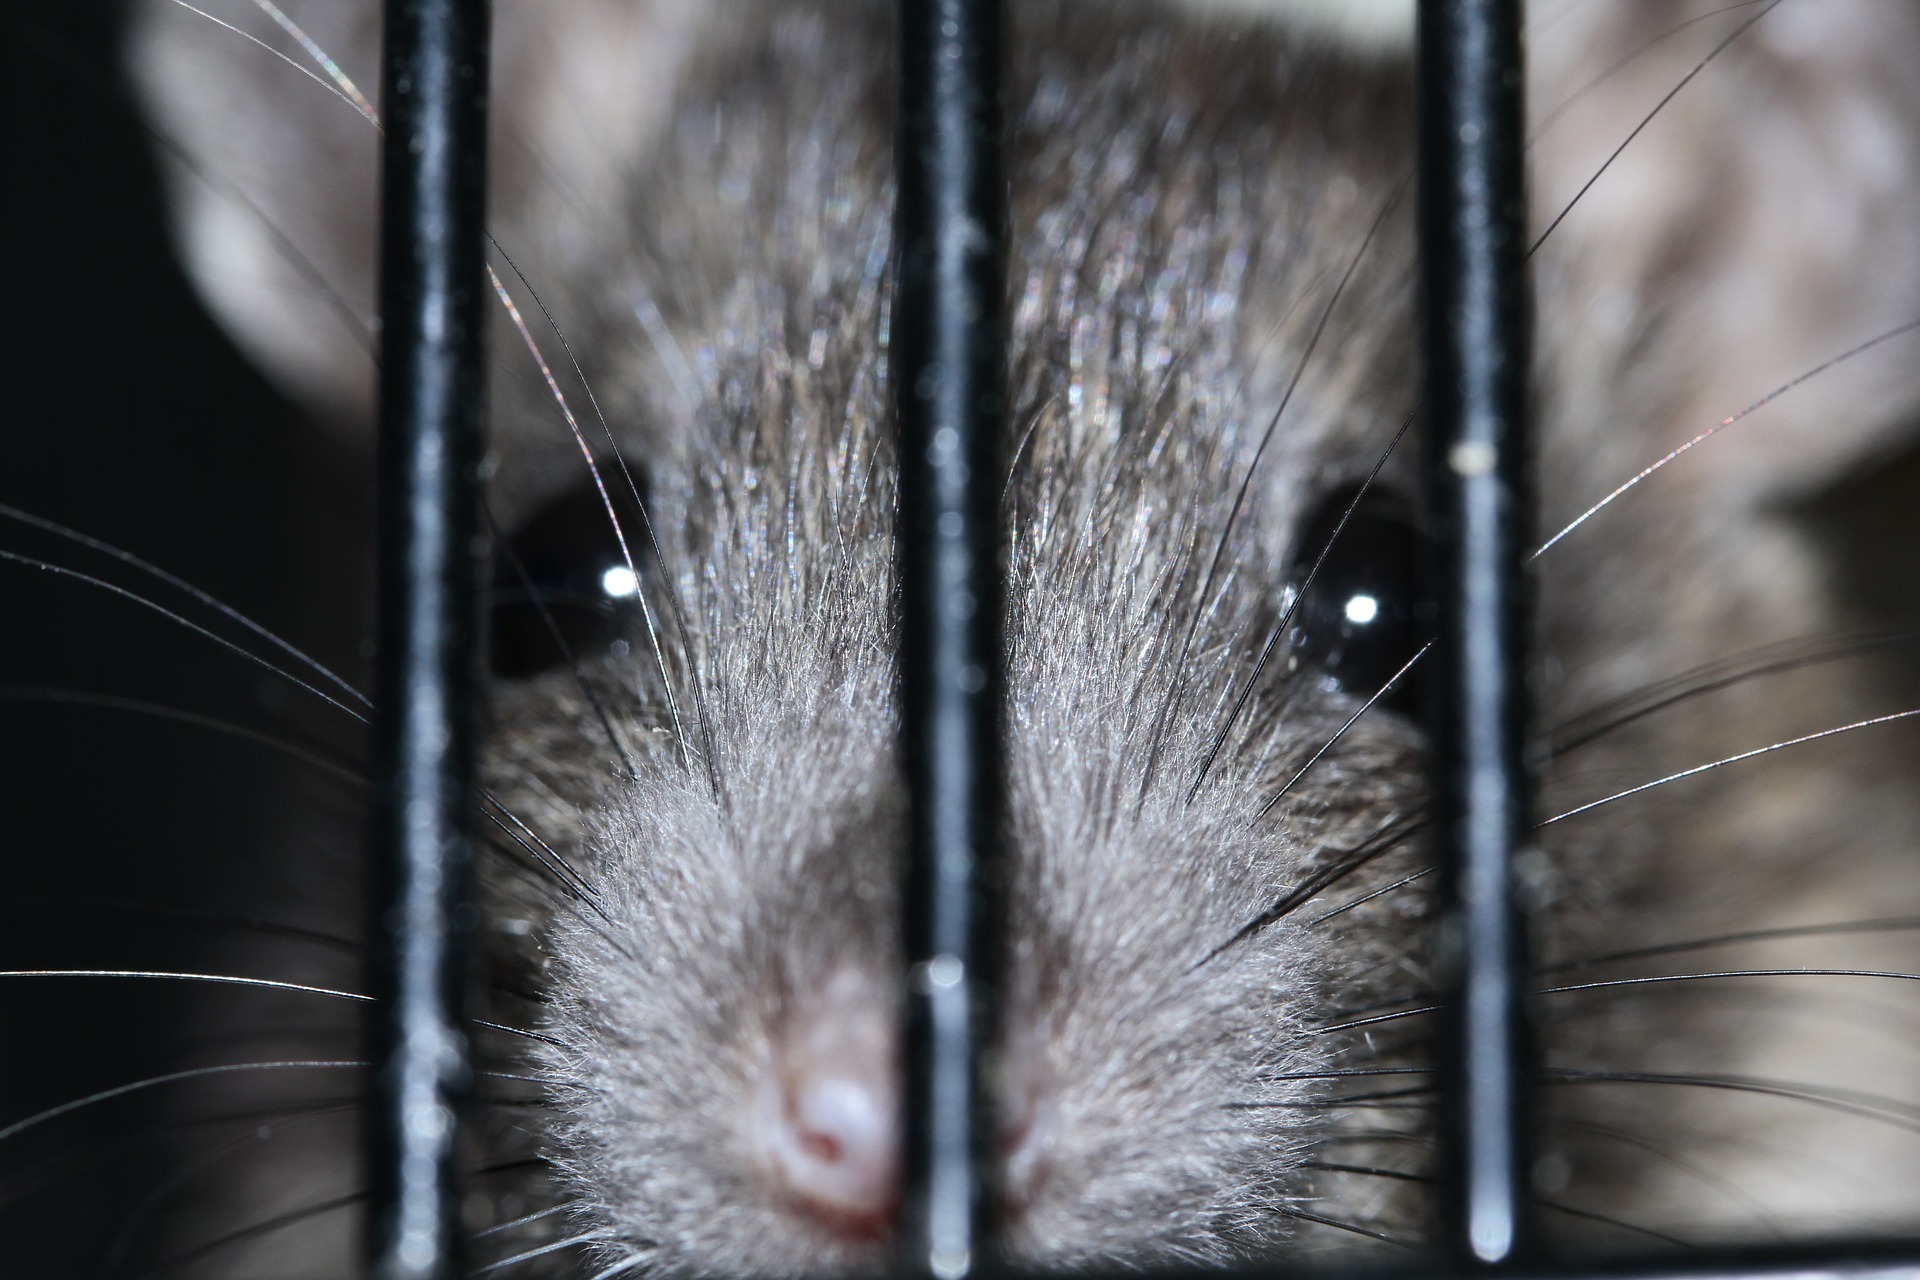 Rat behind bars